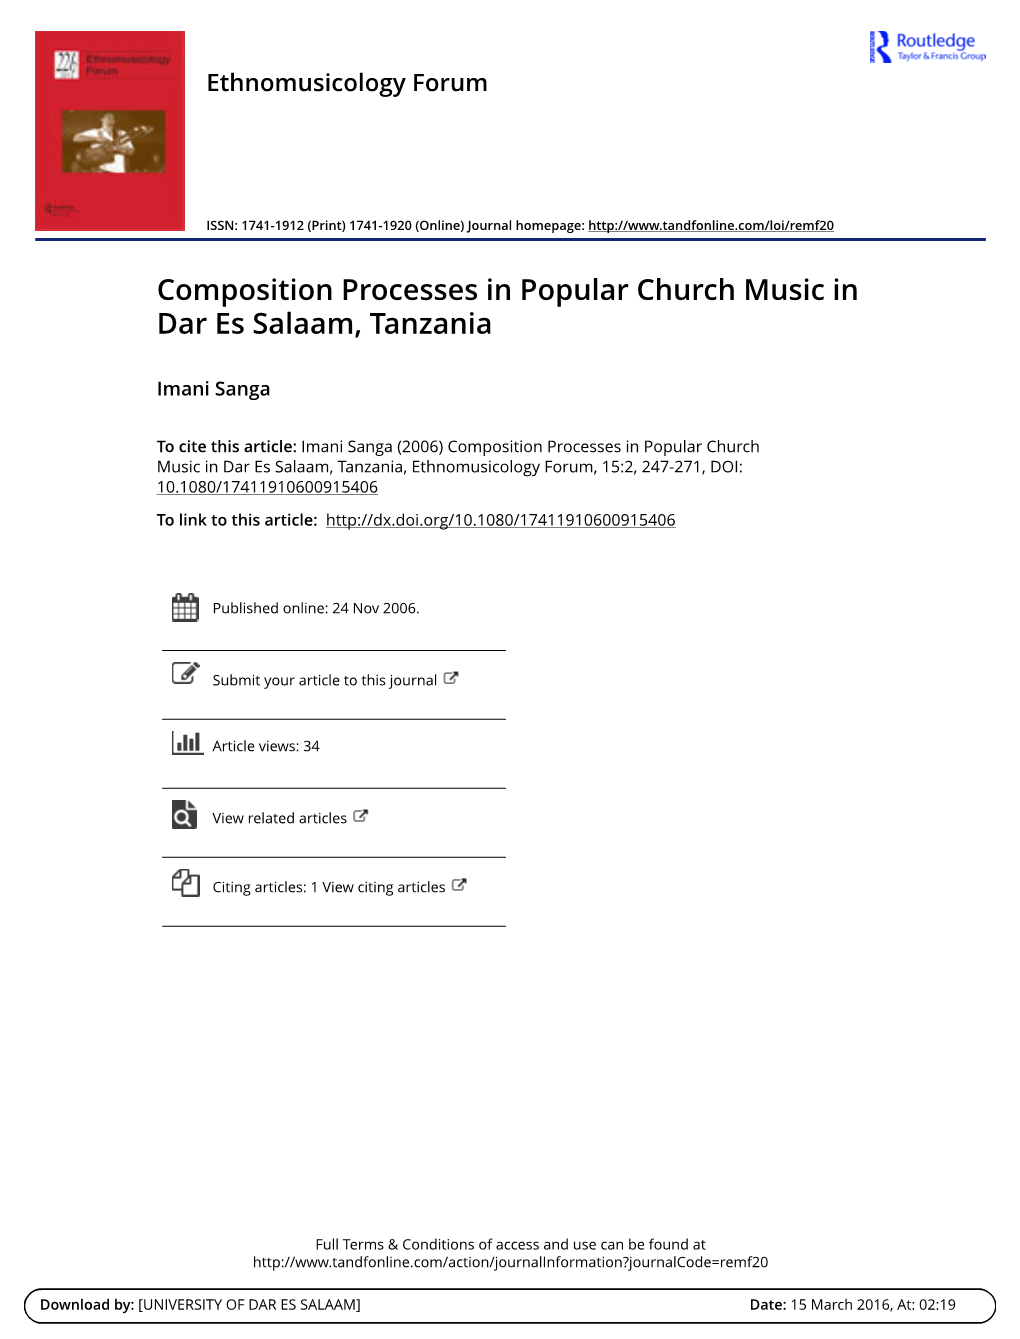 Composition Processes in Popular Church Music in Dar Es Salaam, Tanzania